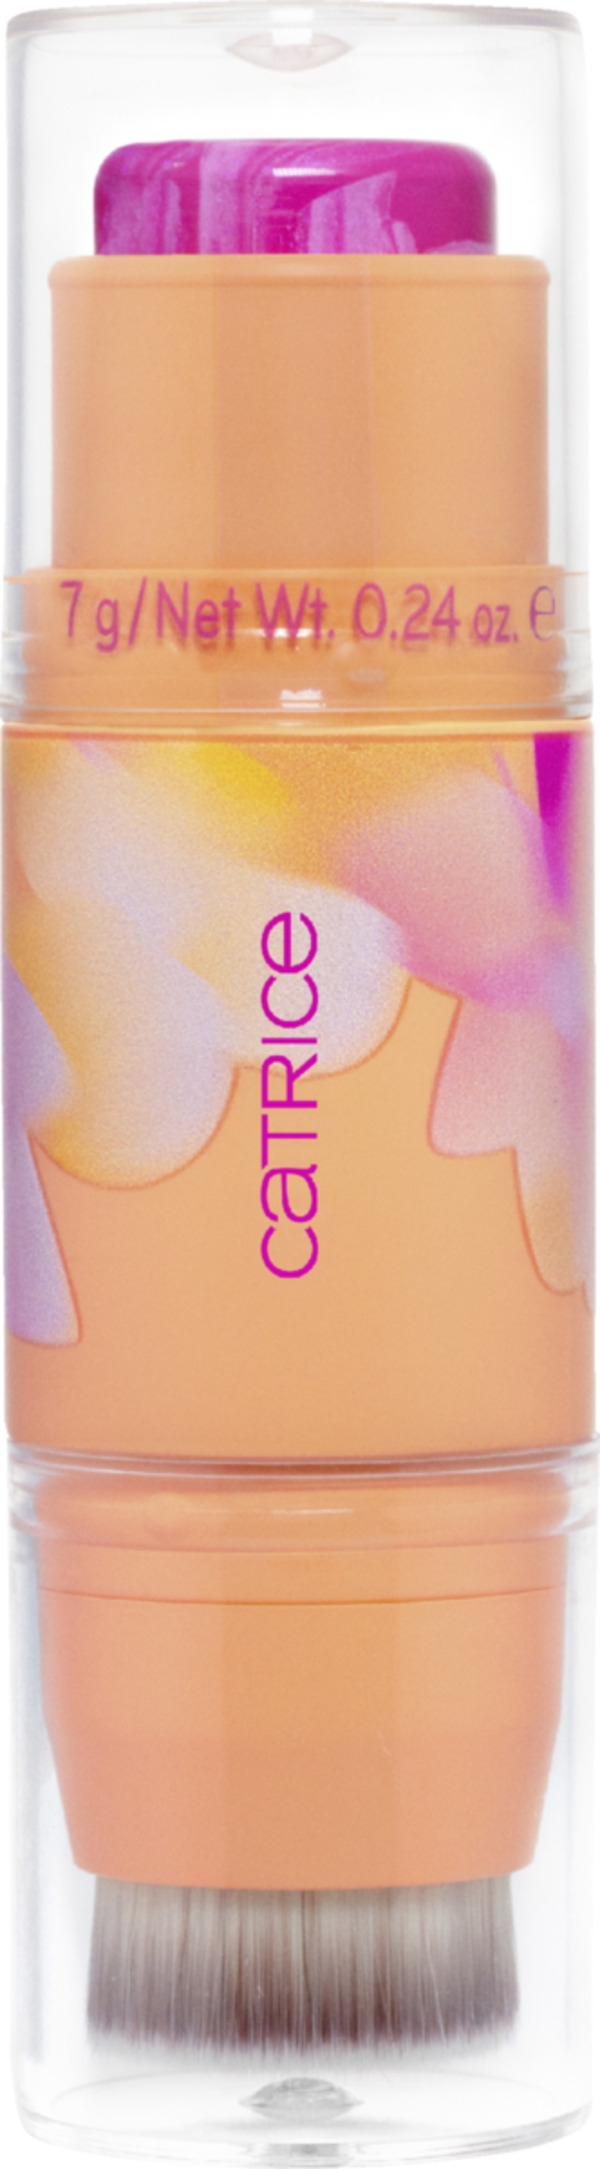 Bild 1 von Catrice Seeking Flowers Blush & Brush Stick C01 Berrylicious